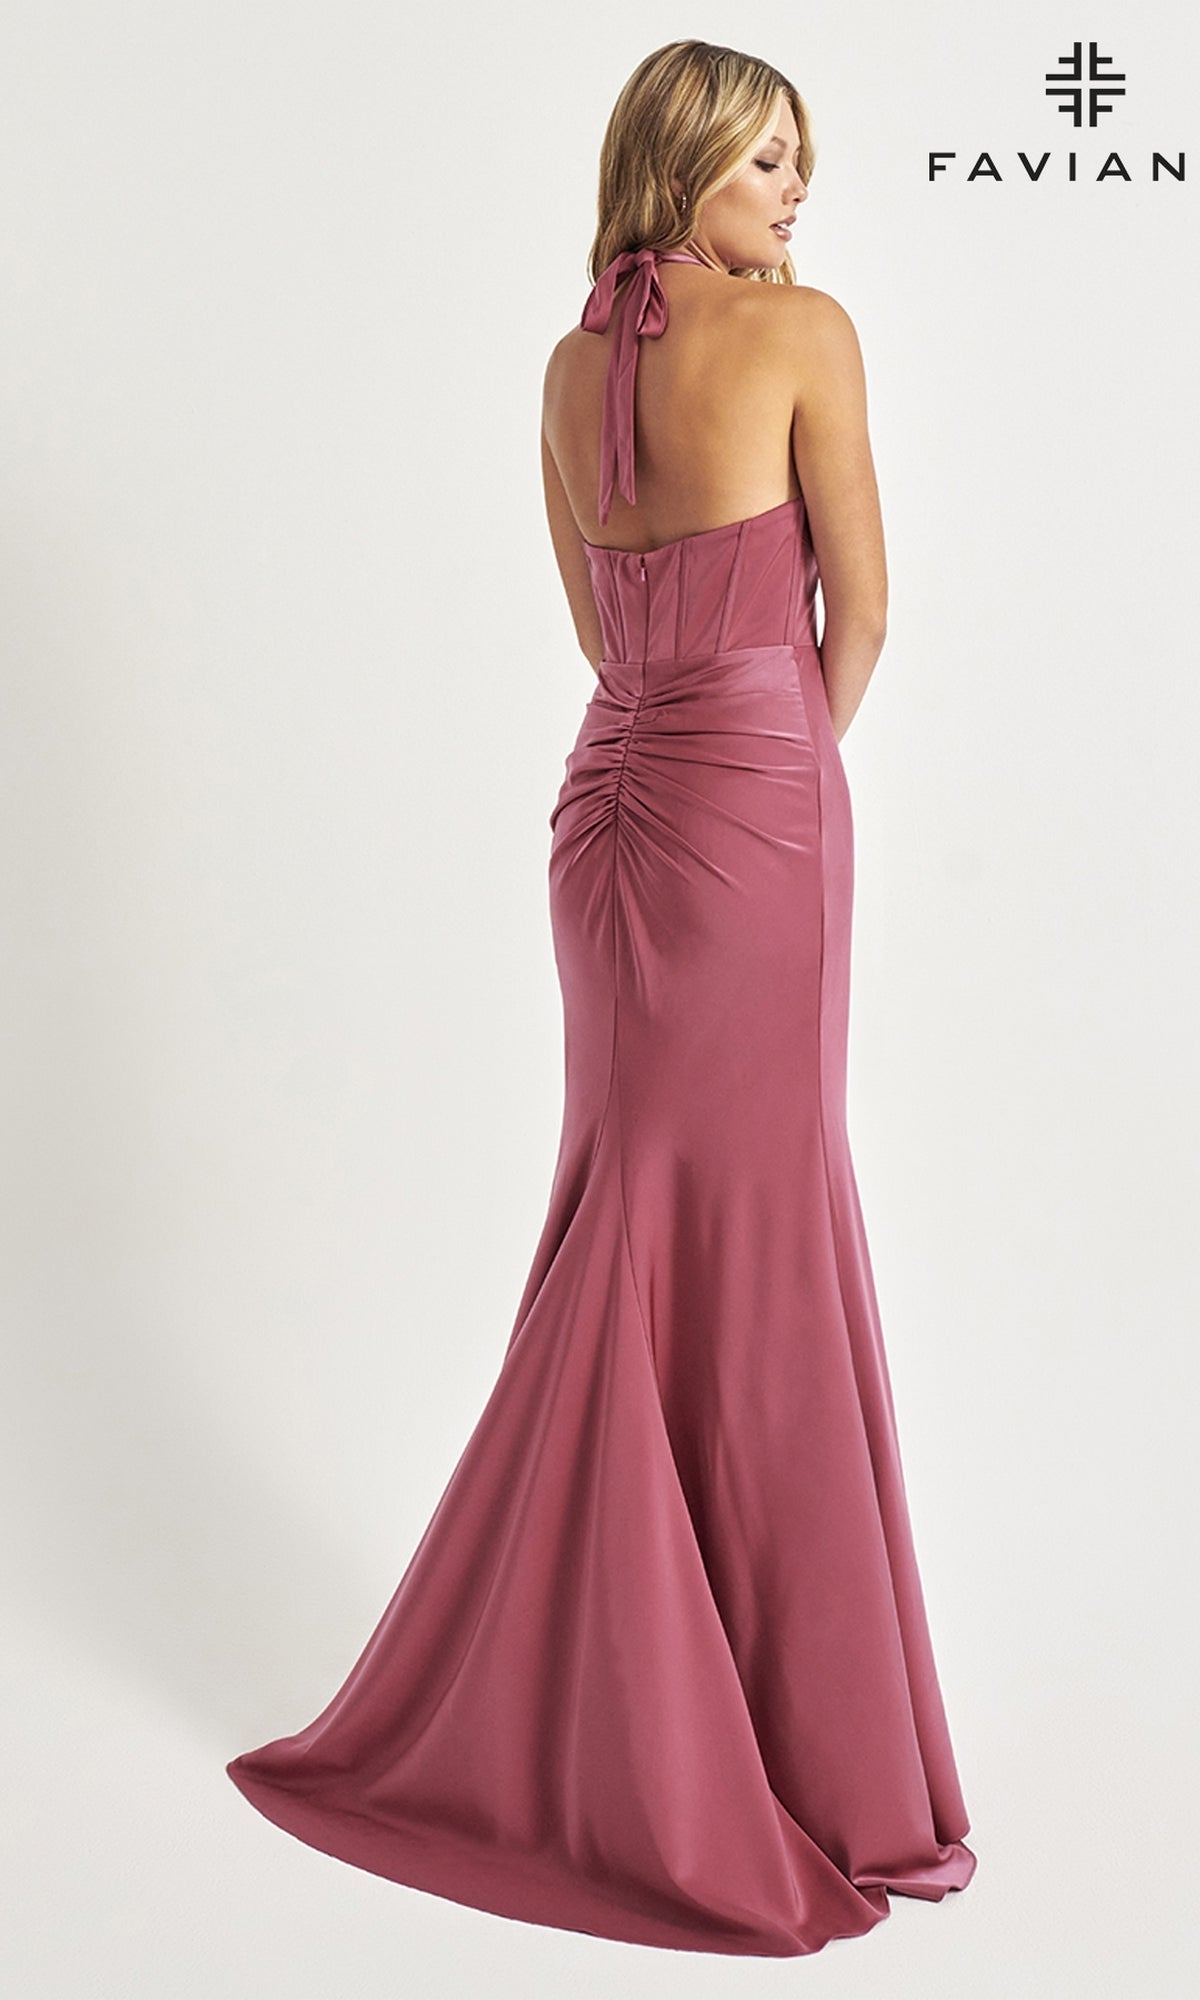  Long Formal Dress 11065 by Faviana